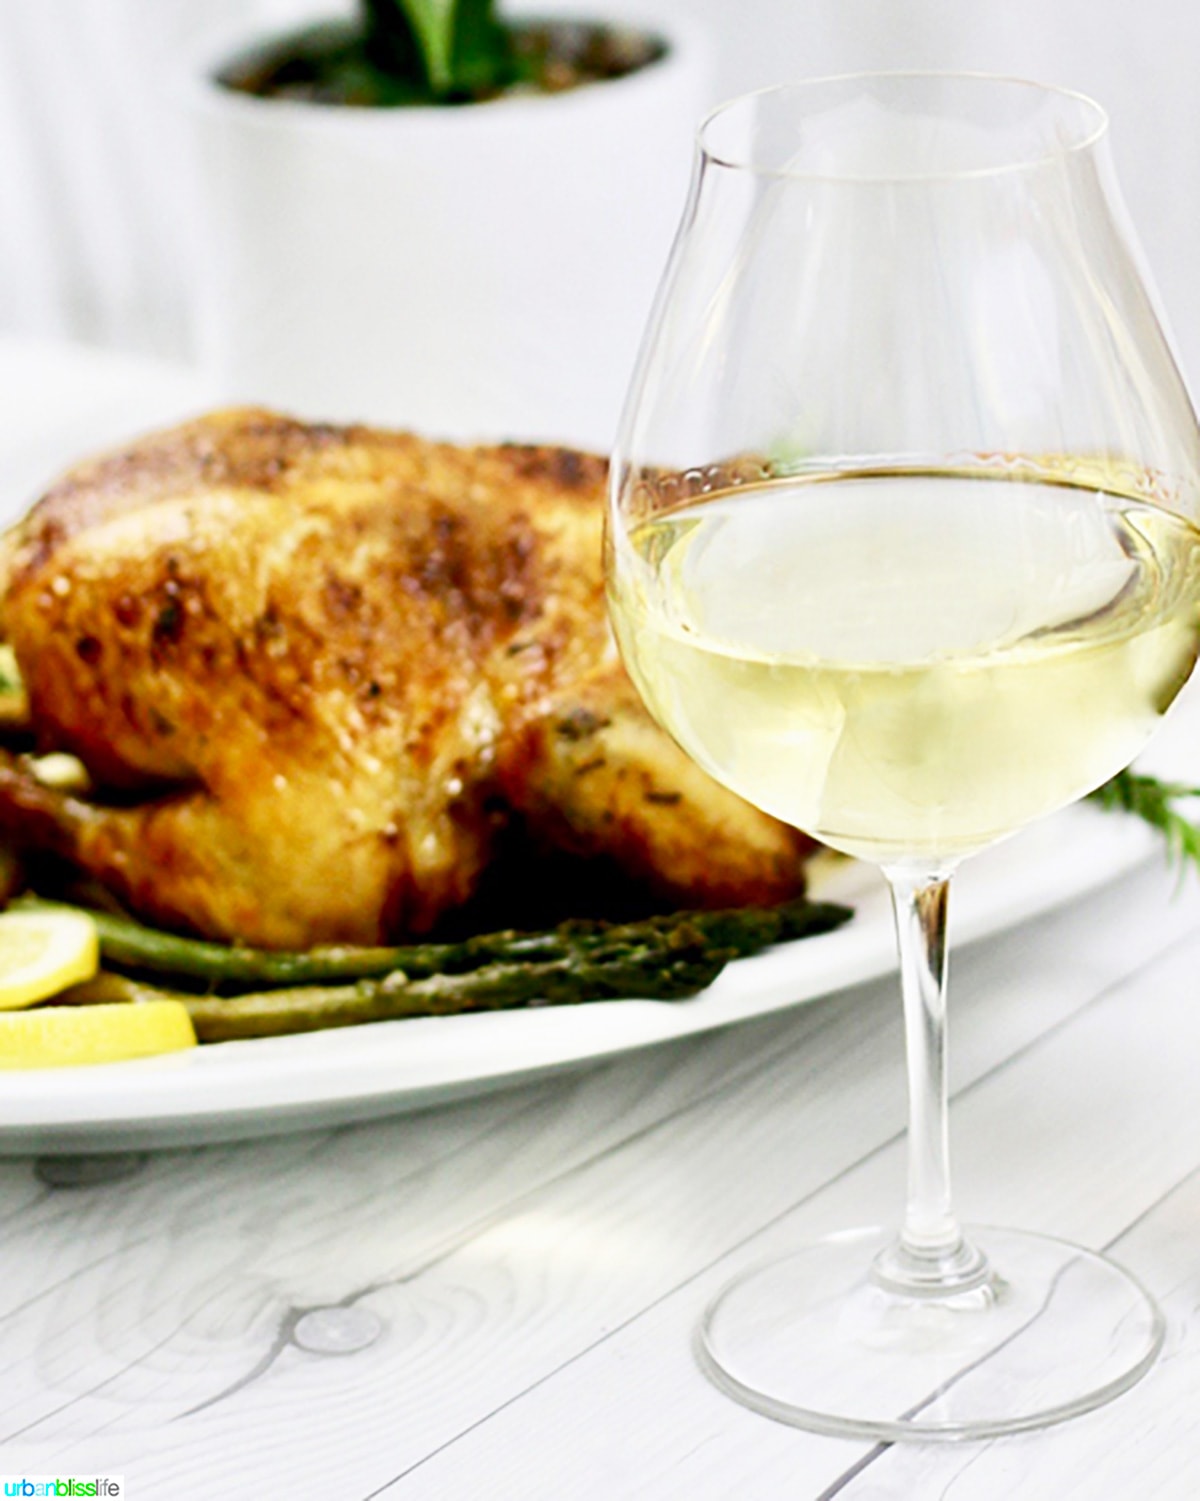 glass of white wine next to a chicken or turkey.